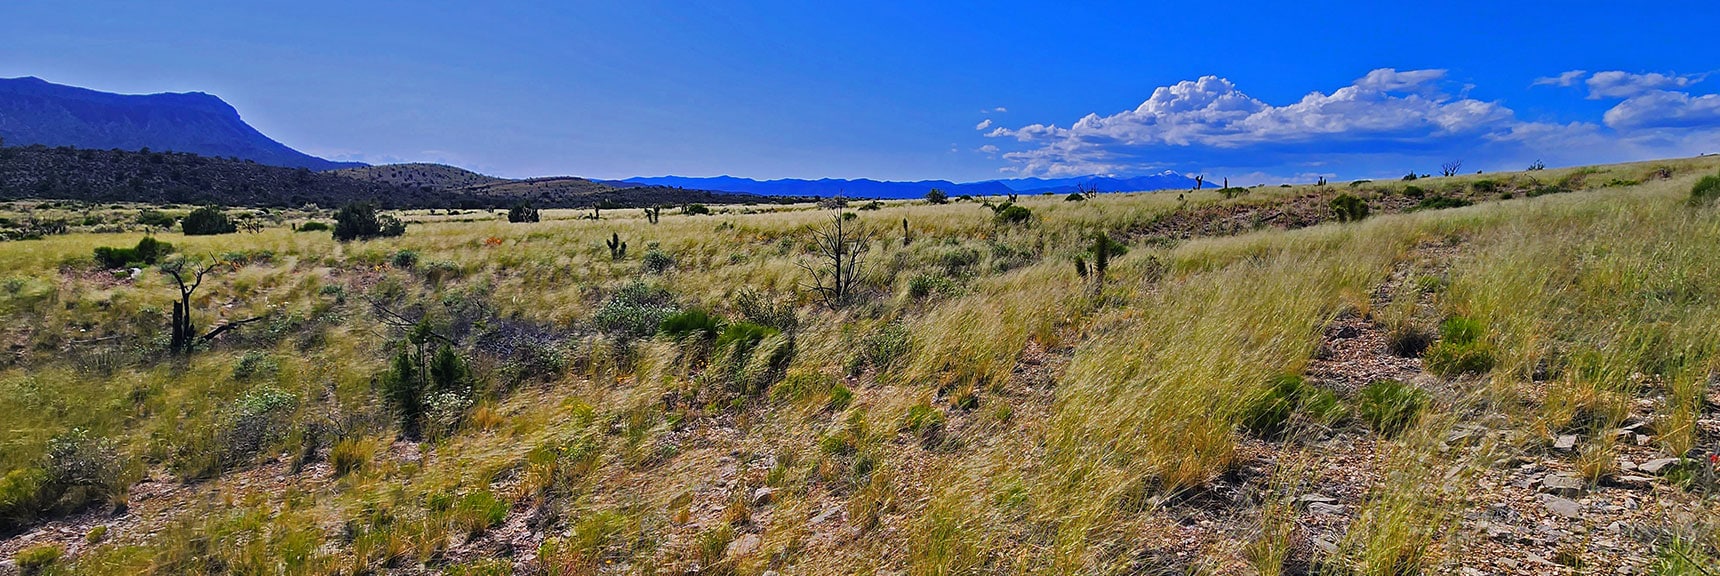 Huge Beautiful Field of Spring Grass Waving in the Wind. | Mt Wilson to Hidden Peak | Upper Crest Ridgeline | Rainbow Mountain Wilderness, Nevada